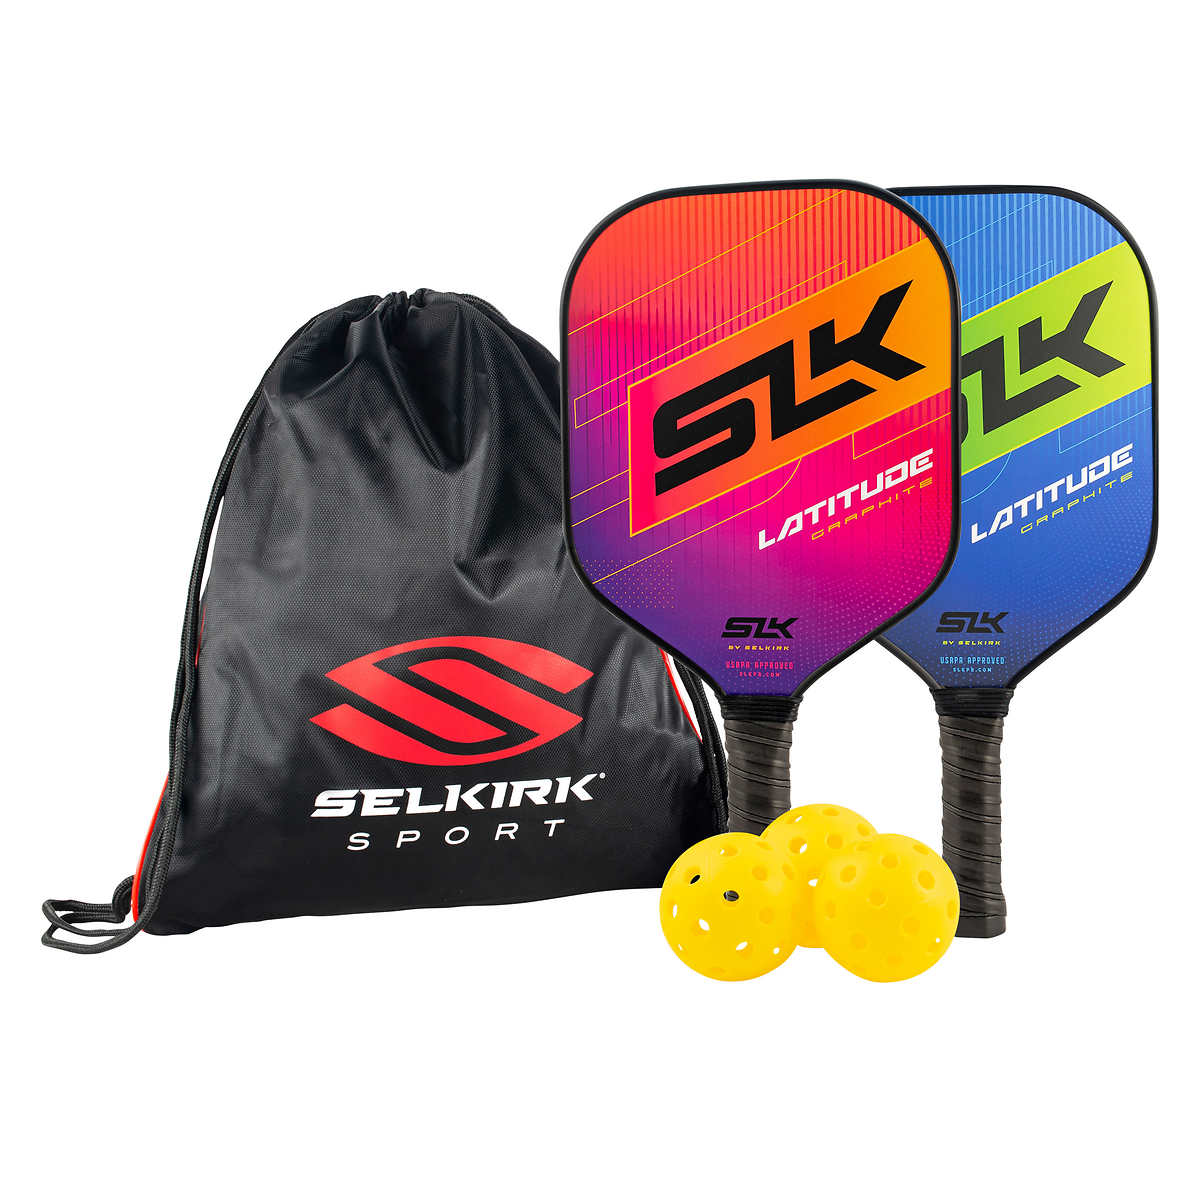 Selkirk SLK Latitude Pickleball Bundle- 2 Paddles, 3 Balls, and 1 Bag (*missing 1 ball*)